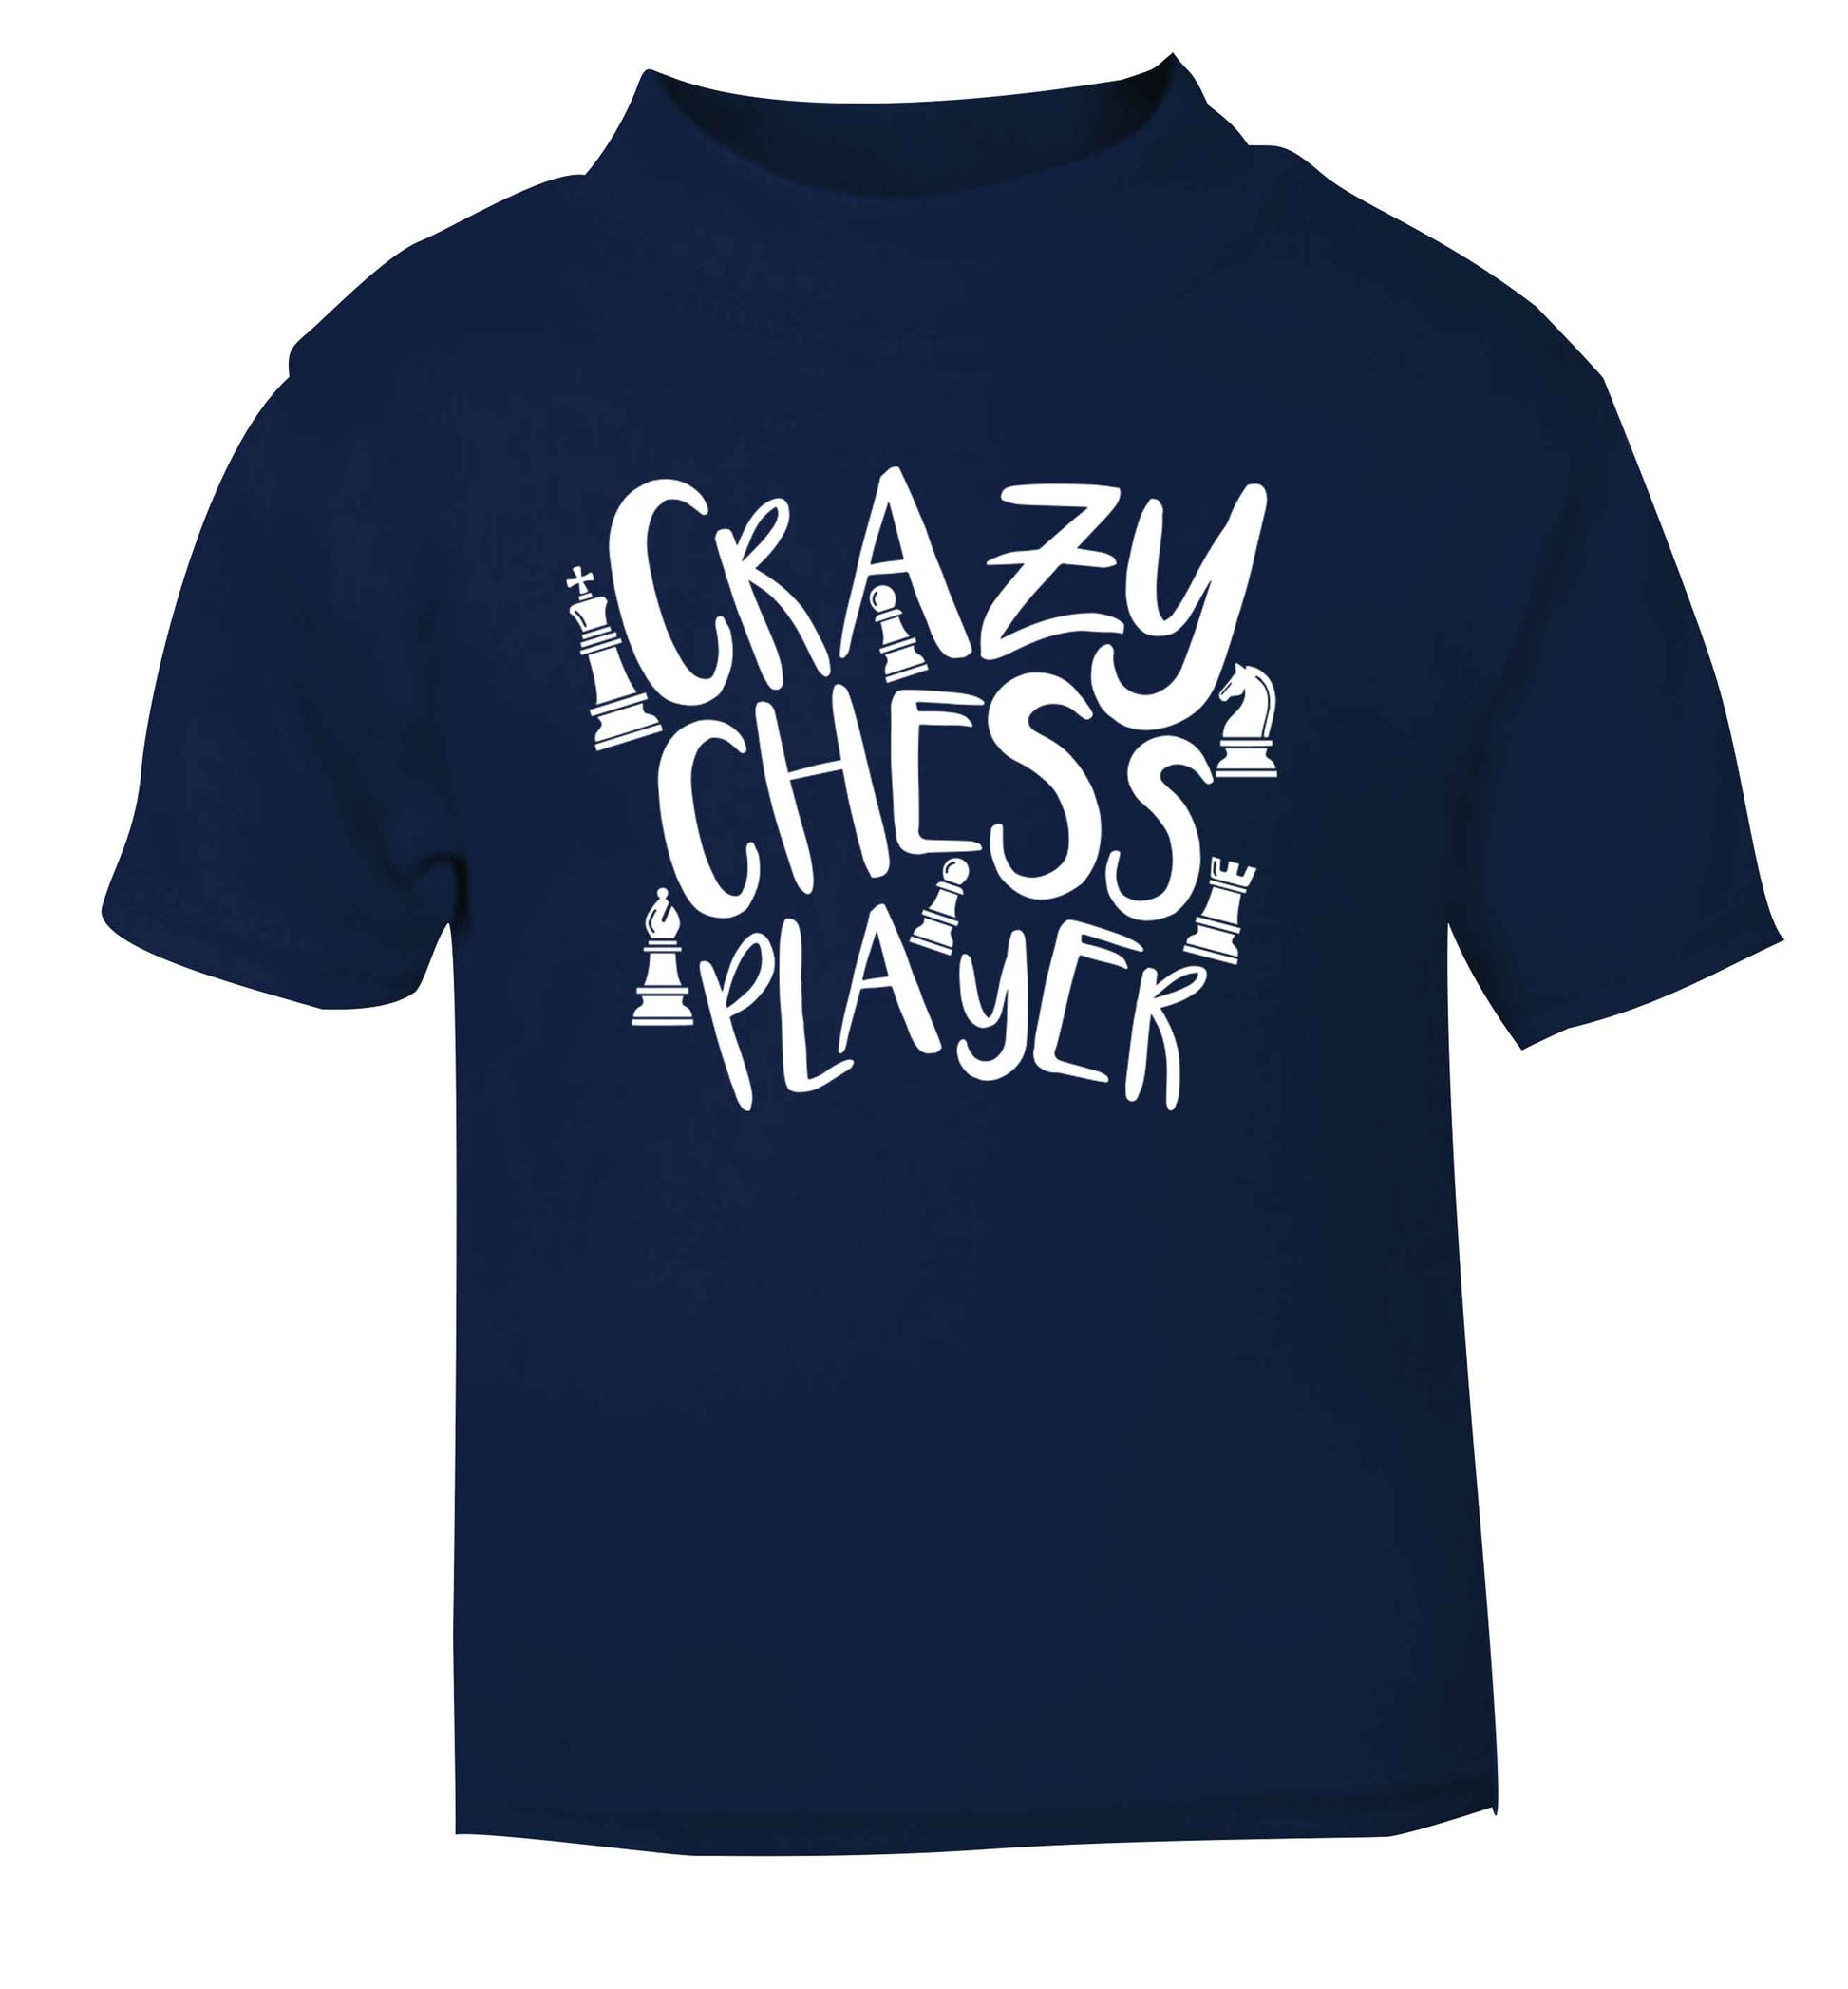 Crazy chess player navy Baby Toddler Tshirt 2 Years